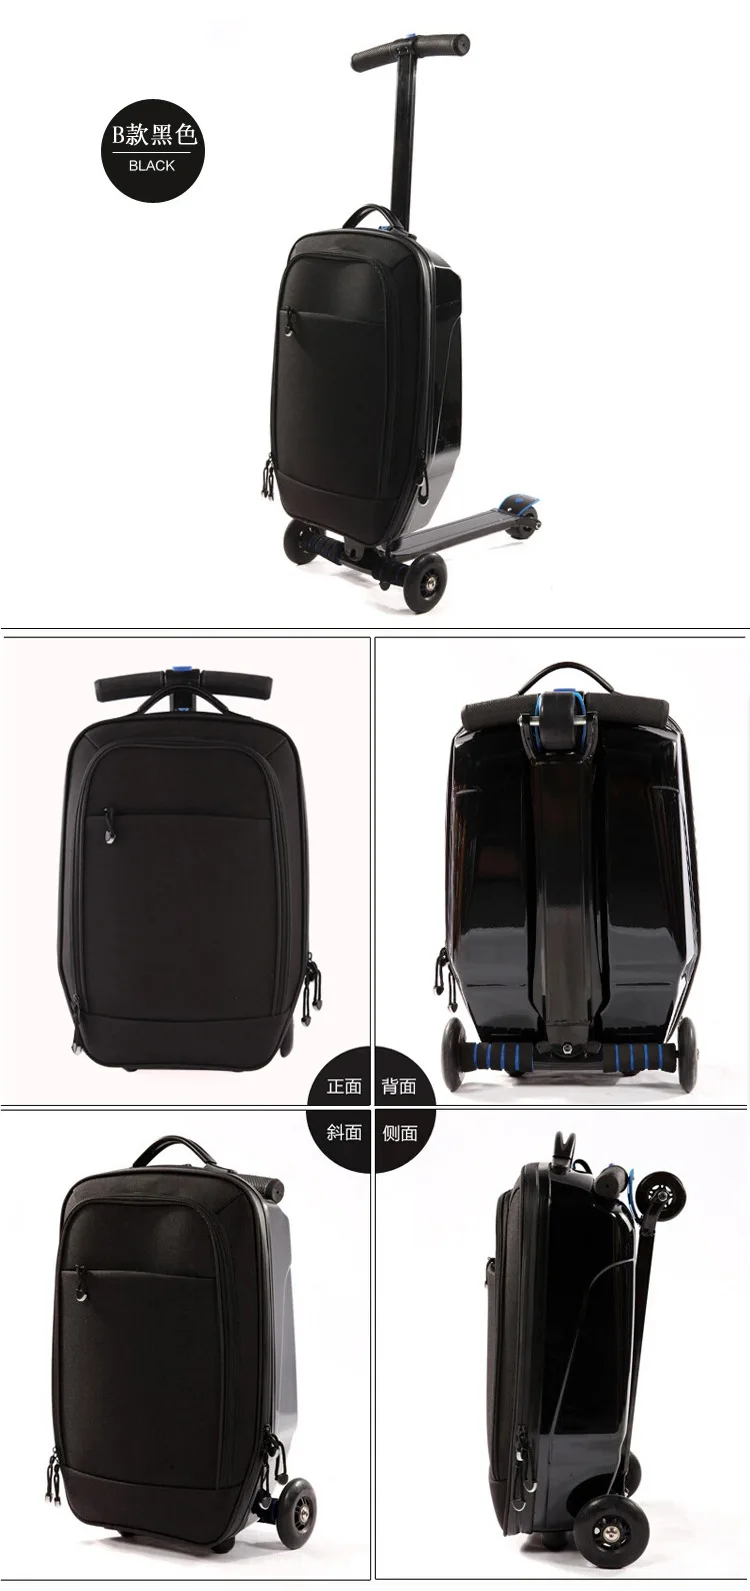 CARRYLOVE мультяшный багаж серии 21 размер супер скейтборд пк багаж на колесиках фирменный туристический чемодан на вращающихся колесиках